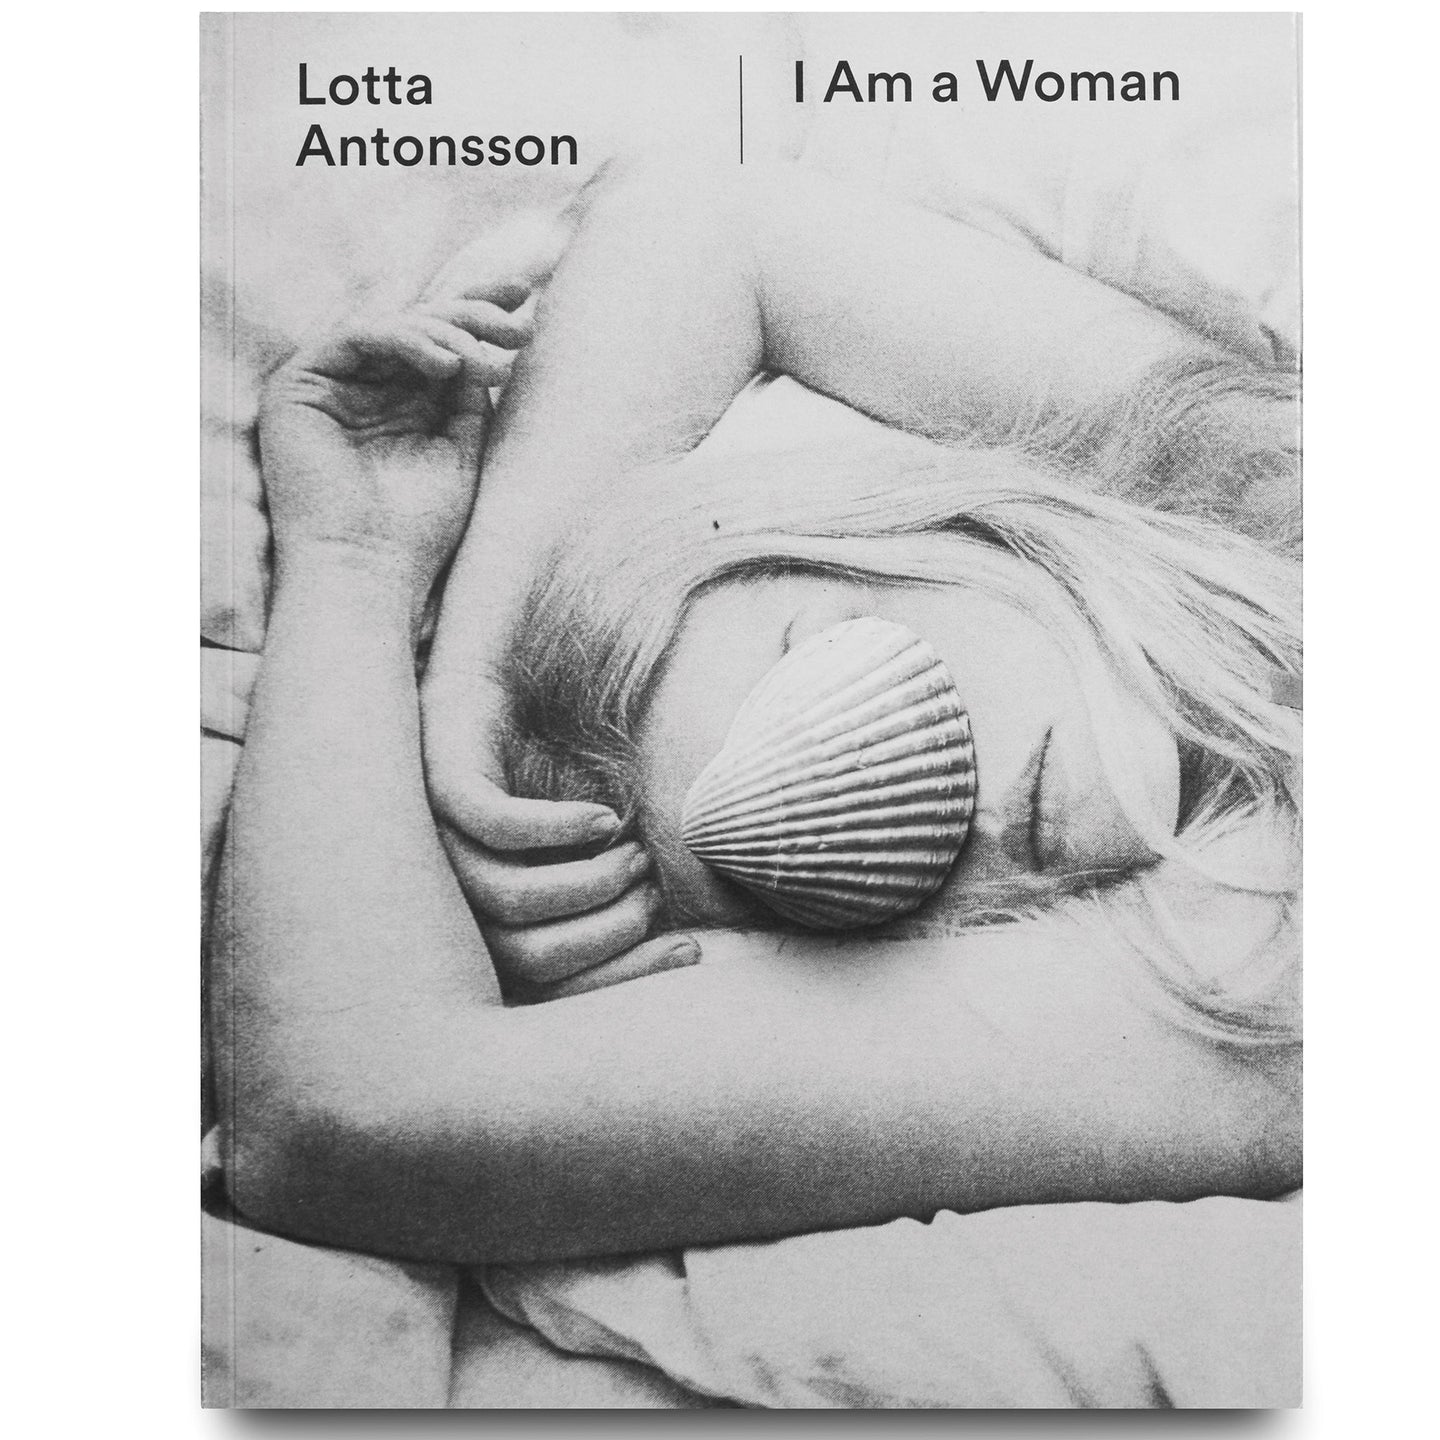 LOTTA ANTONSSON: I AM A WOMAN